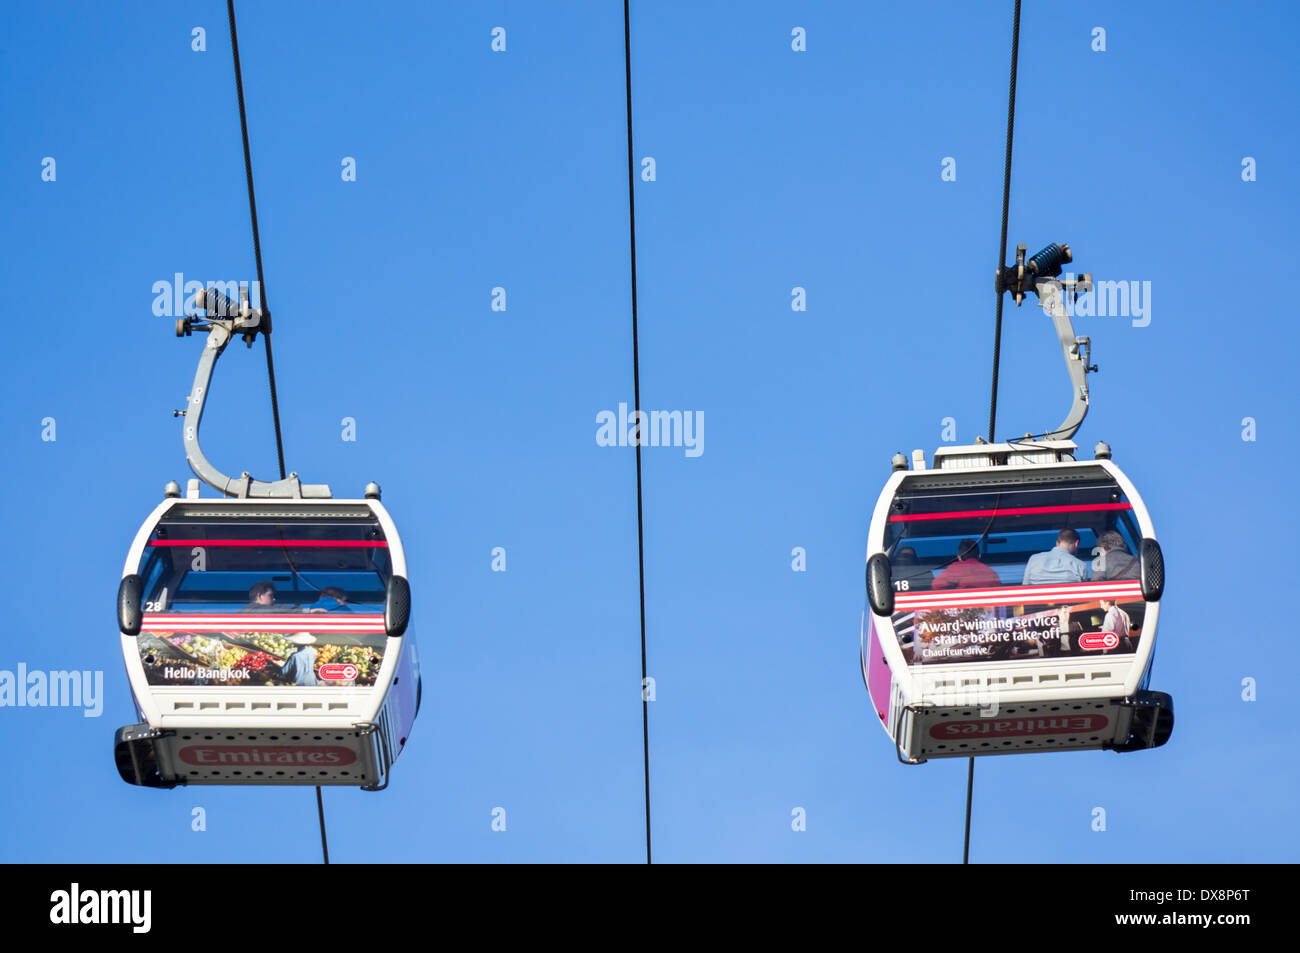 Gondolas of the Emirates Air Line cable car, London England United Kingdom UK Stock Photo